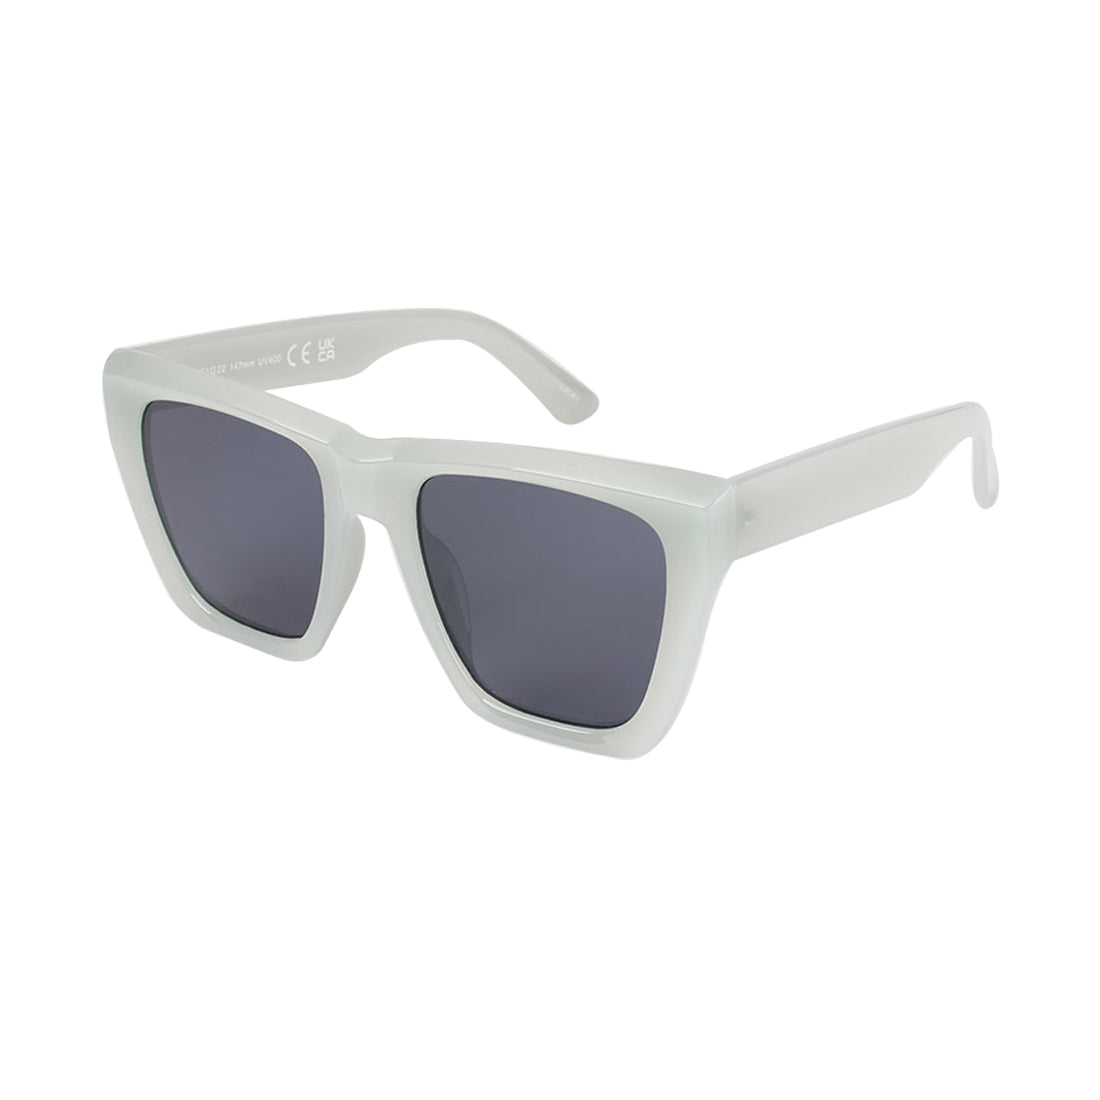 Empire Cove Sunglasses Oversized Square Stylish Trendy Sunnies Shades UV Protection